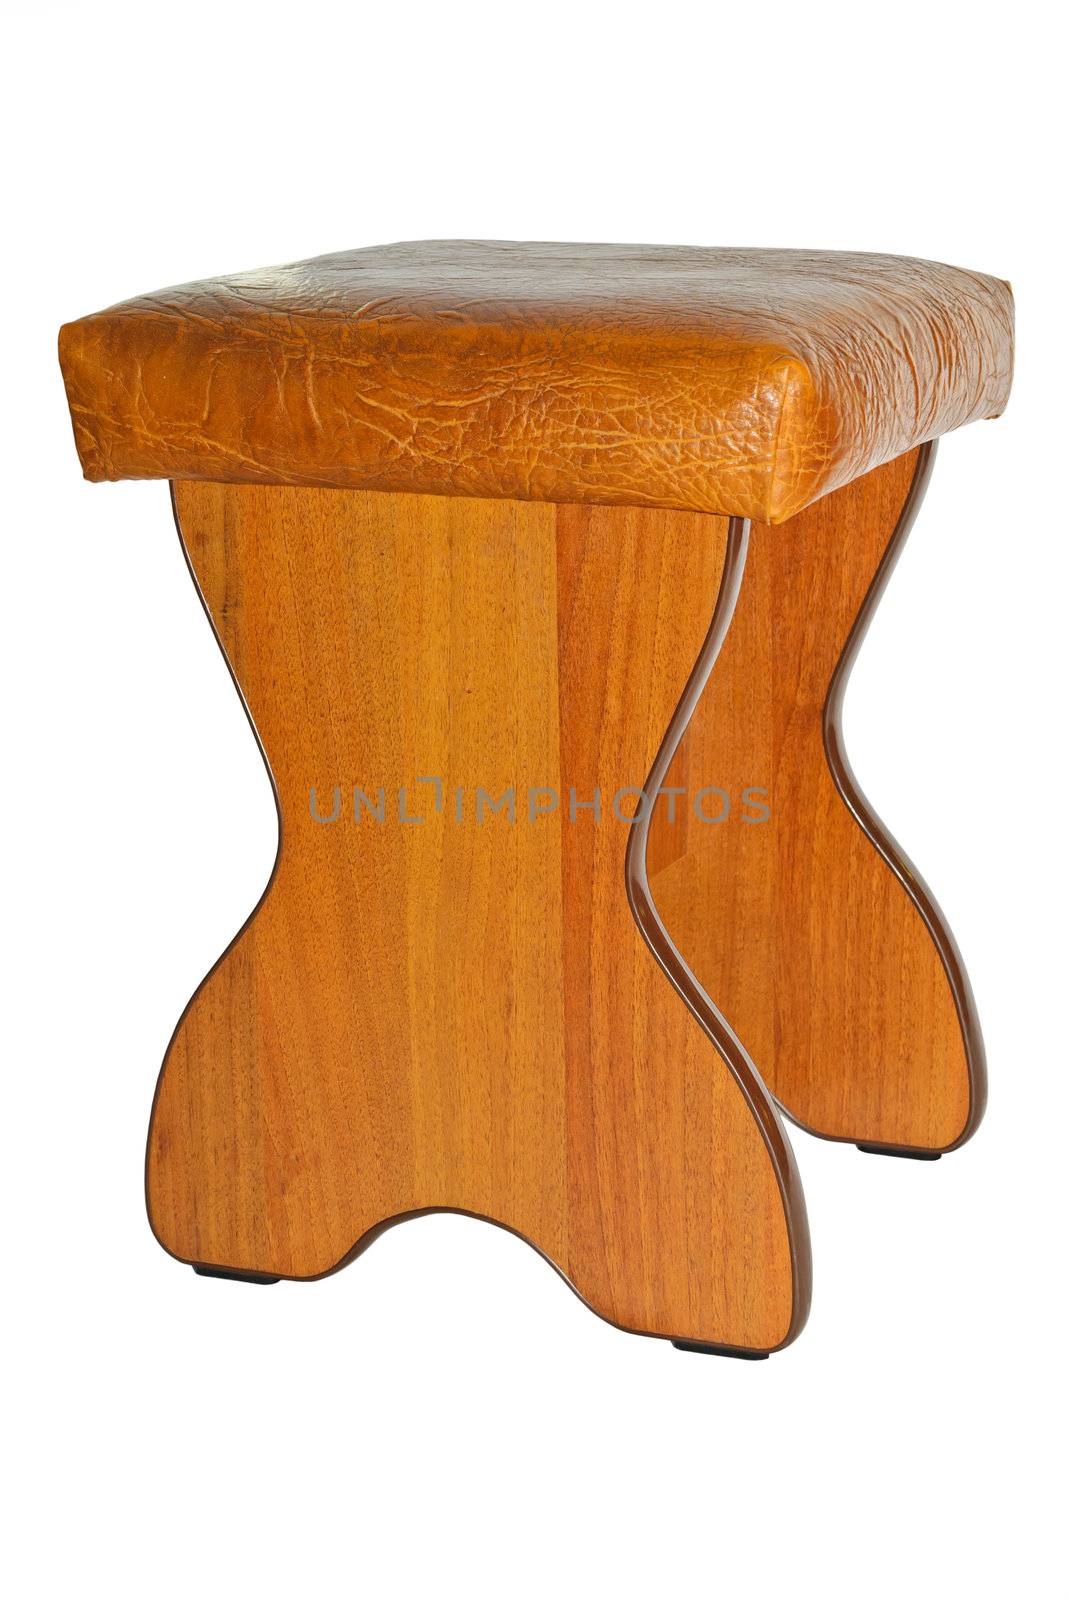 Wooden stool by firewings